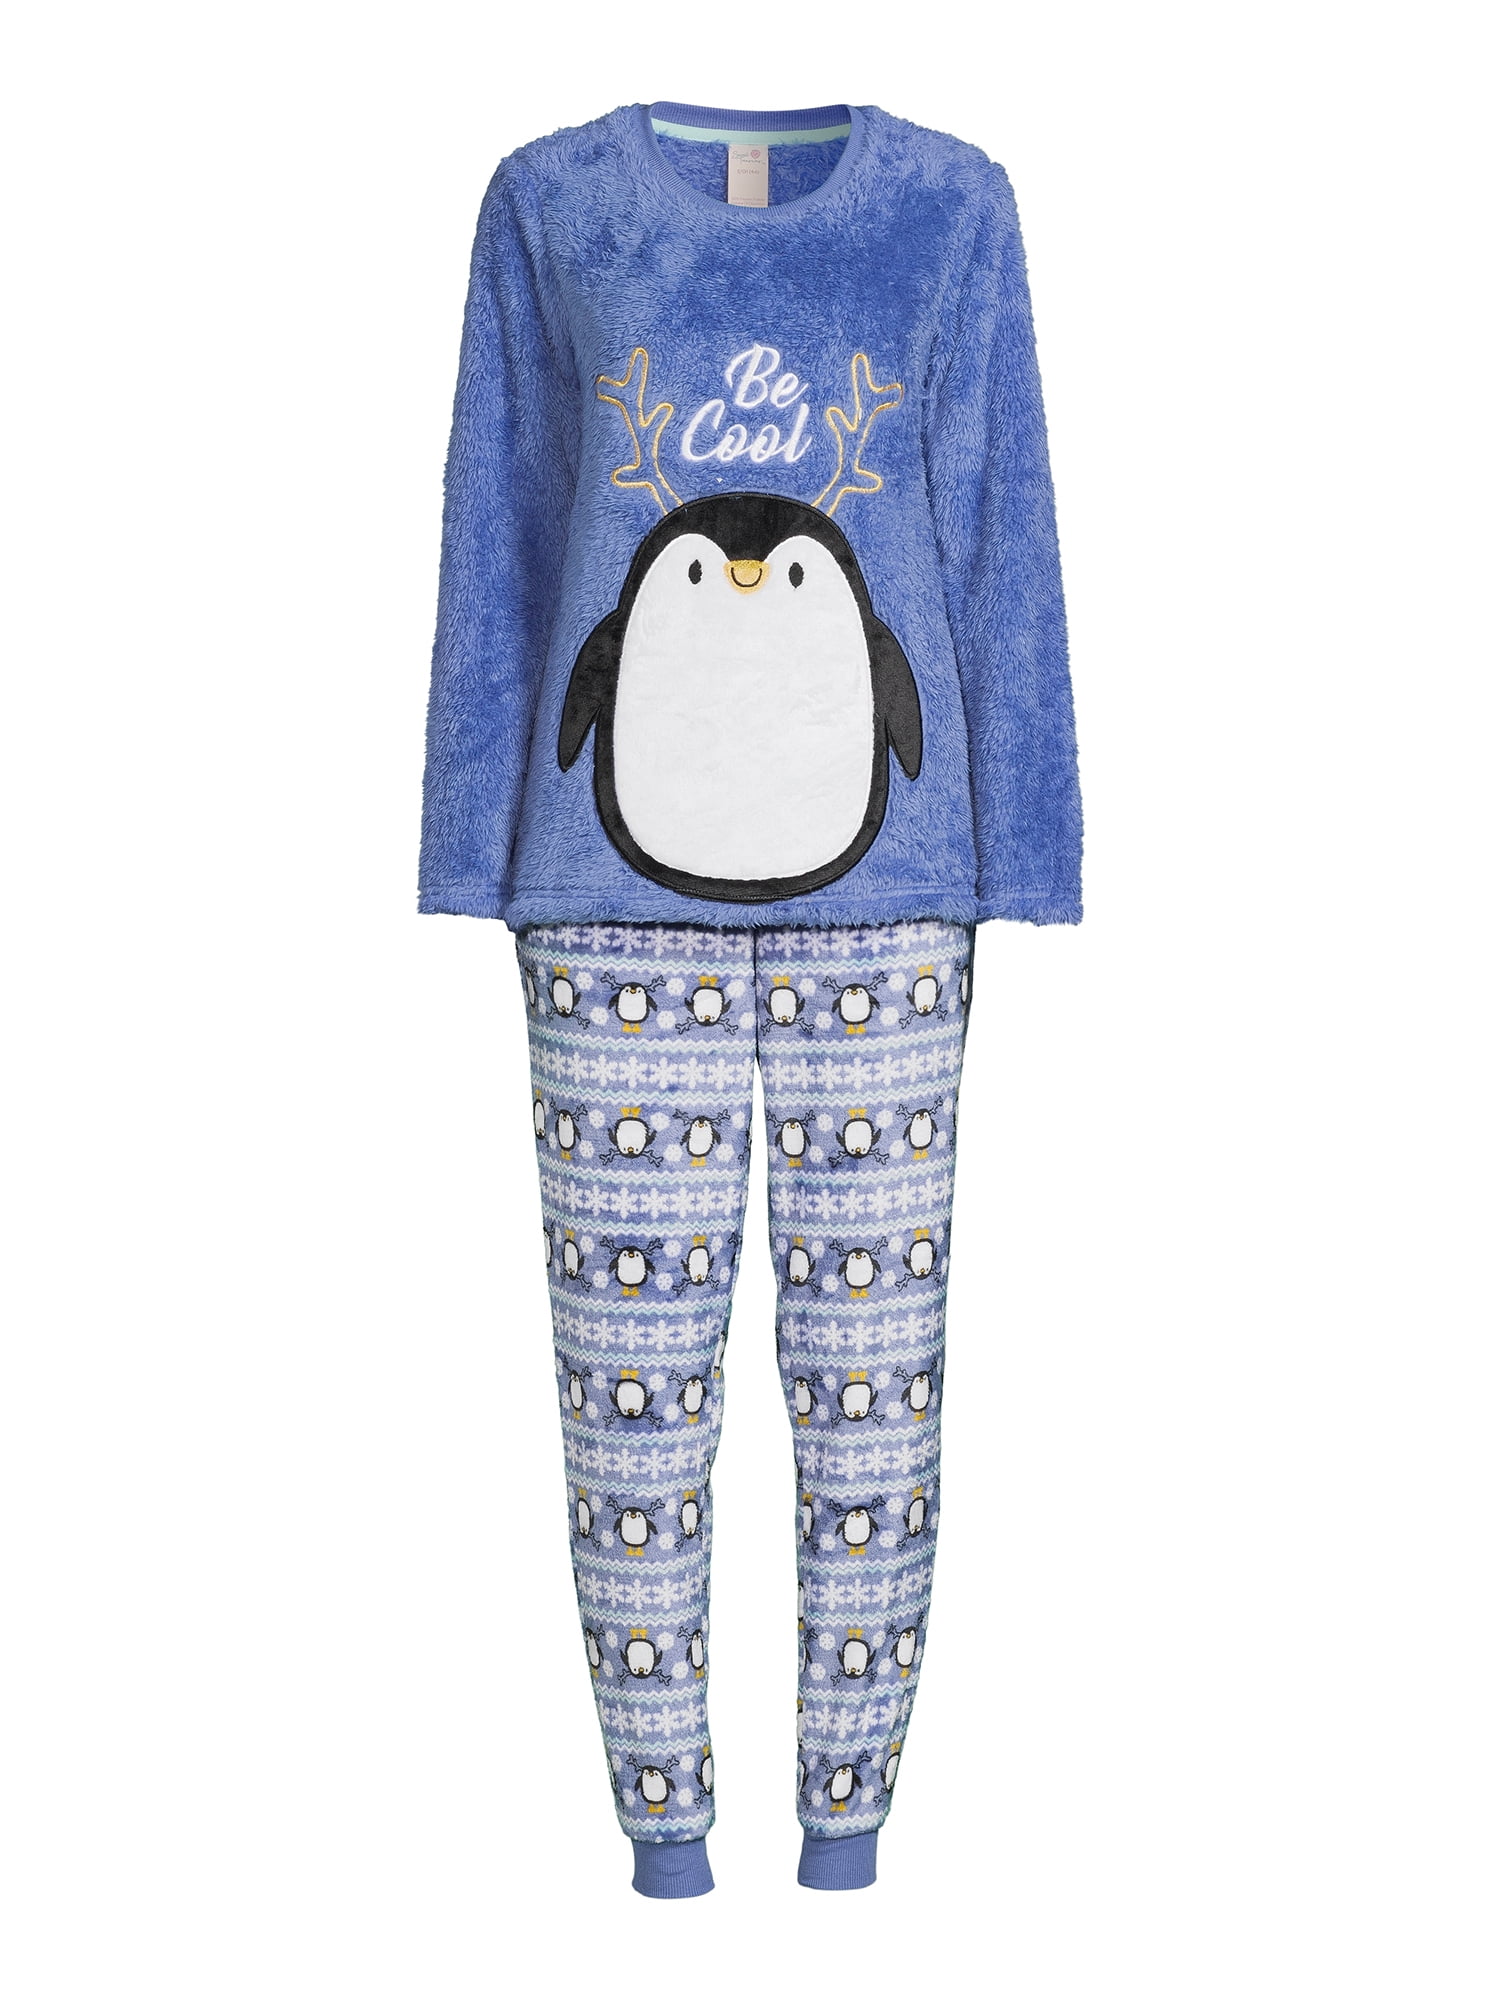 Penguin Pajama, Woman Pjs, Final Sale, Woman Pajamas, Pajamas Set, Unique  Gift for Her, Cozy Pajama, Comfortable Homewear, Gift for Mother 